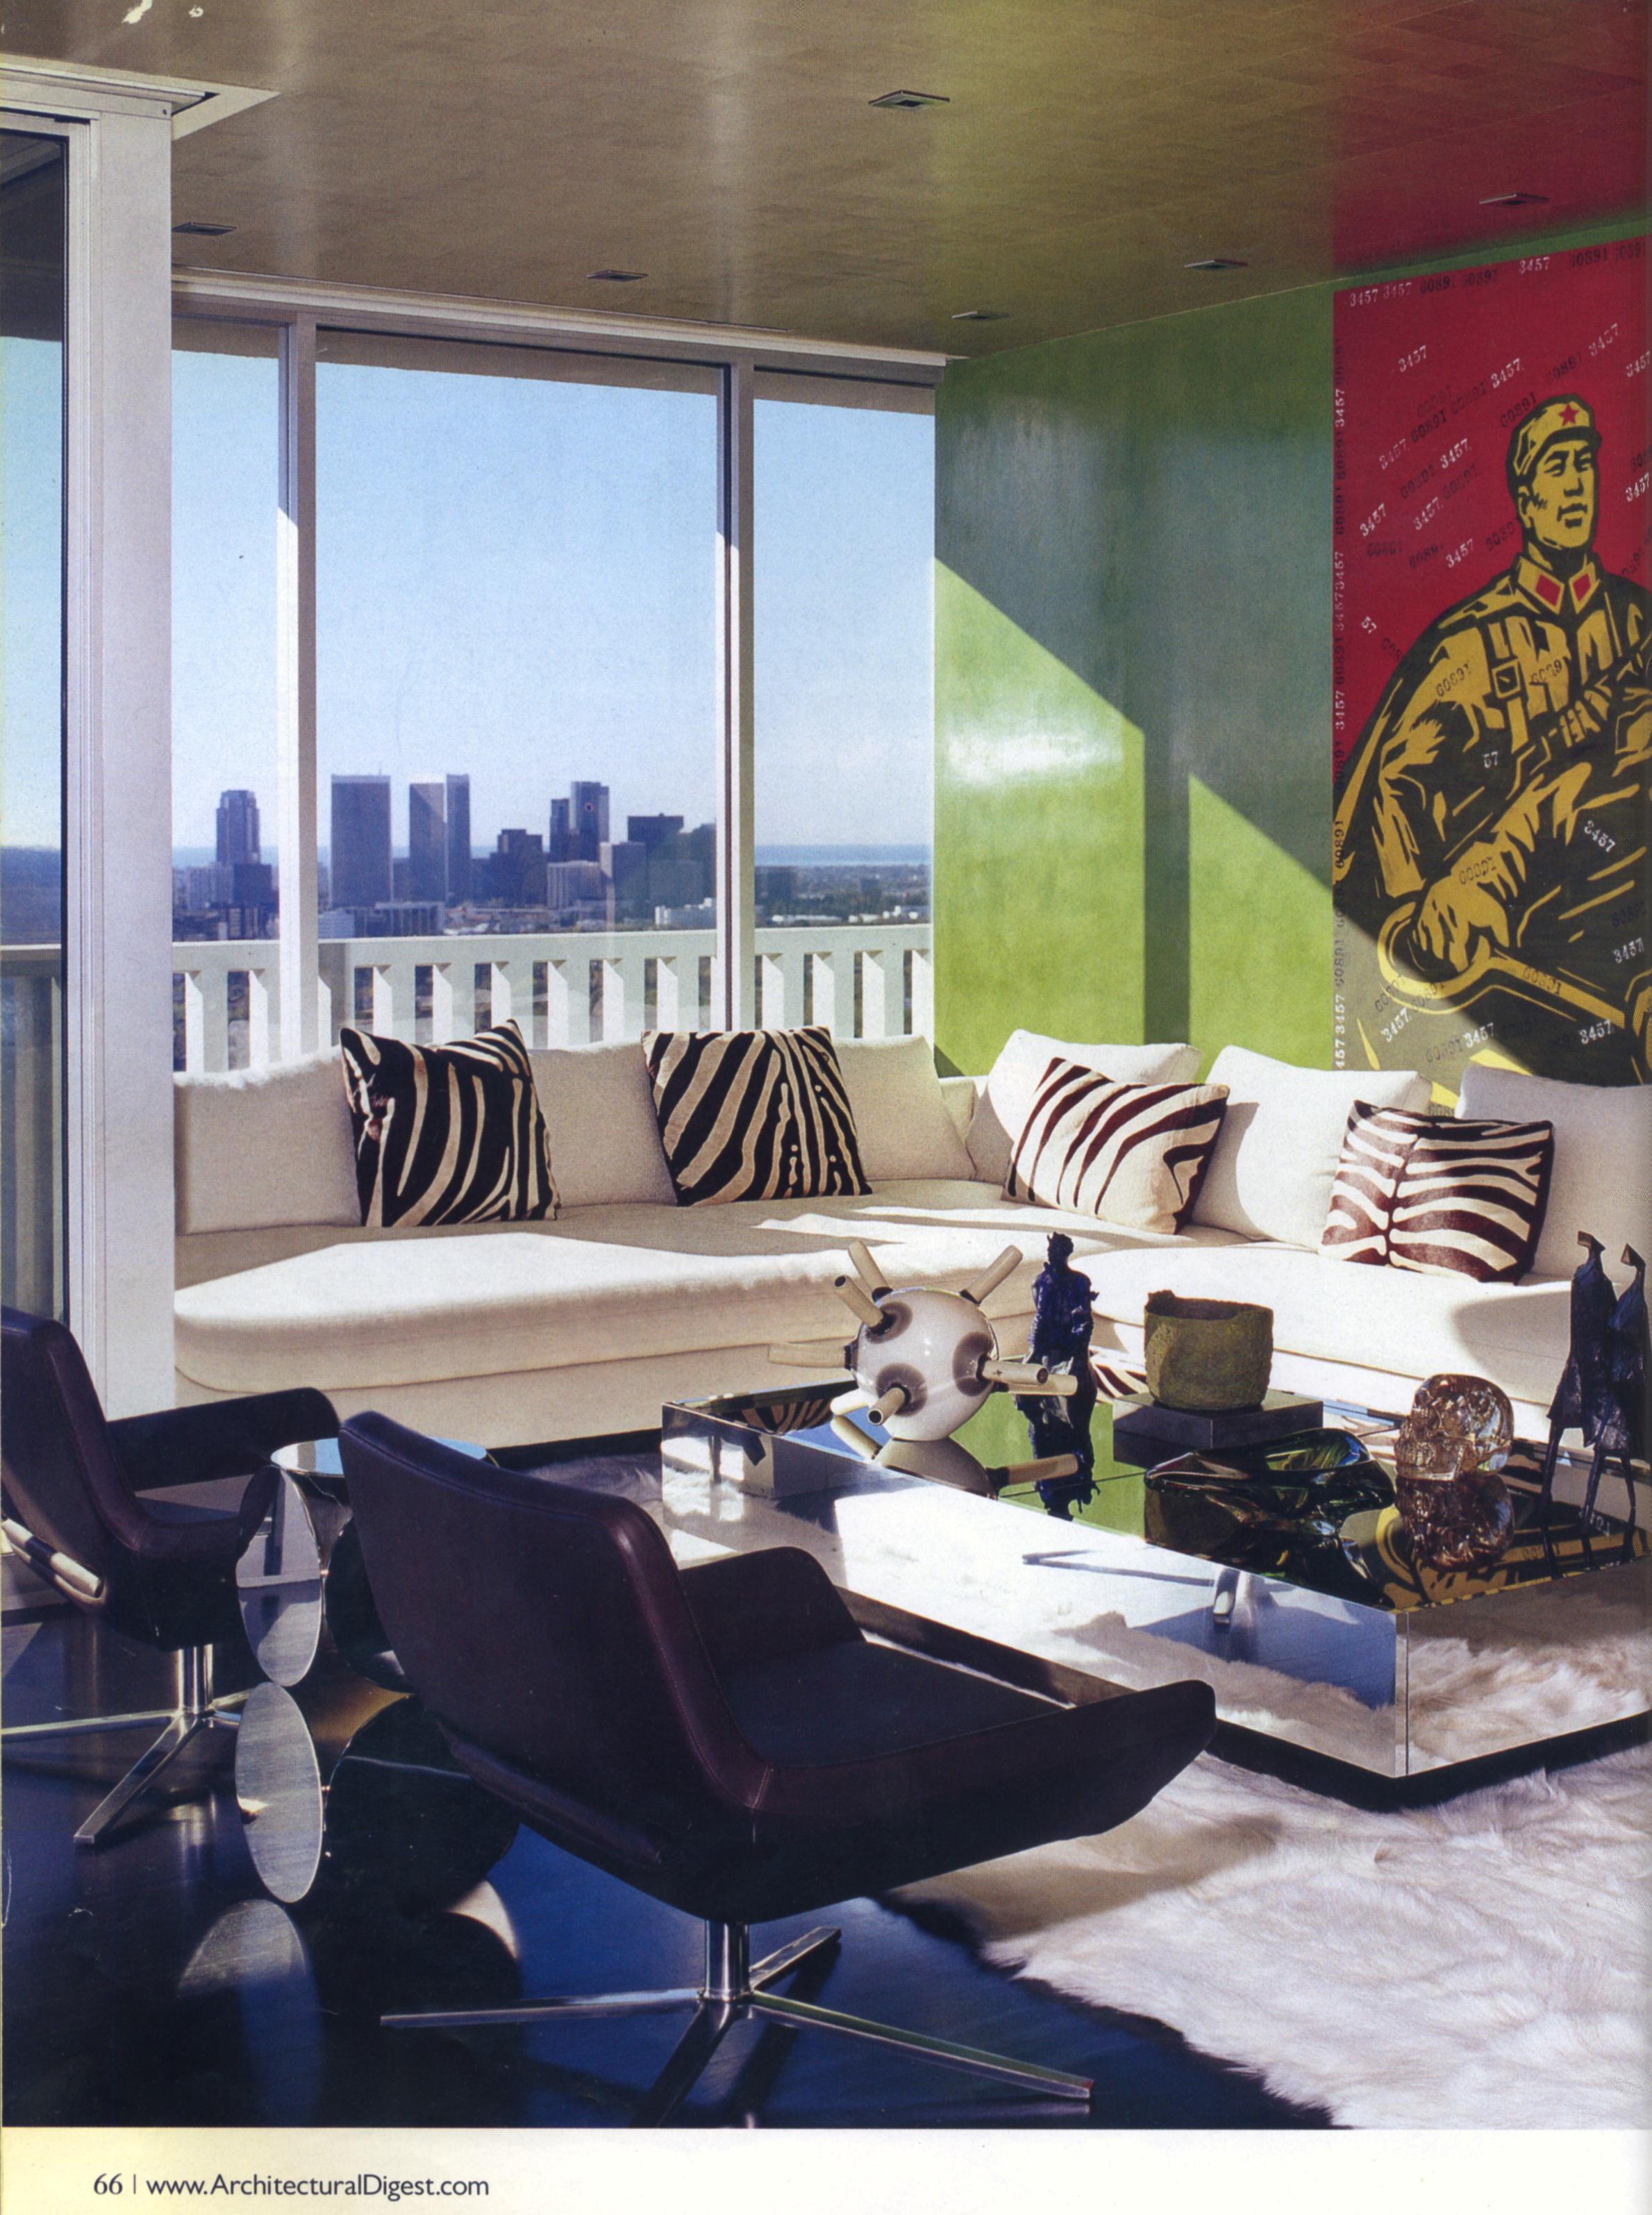 Architectural Digest Dec '09: Elton John's living room